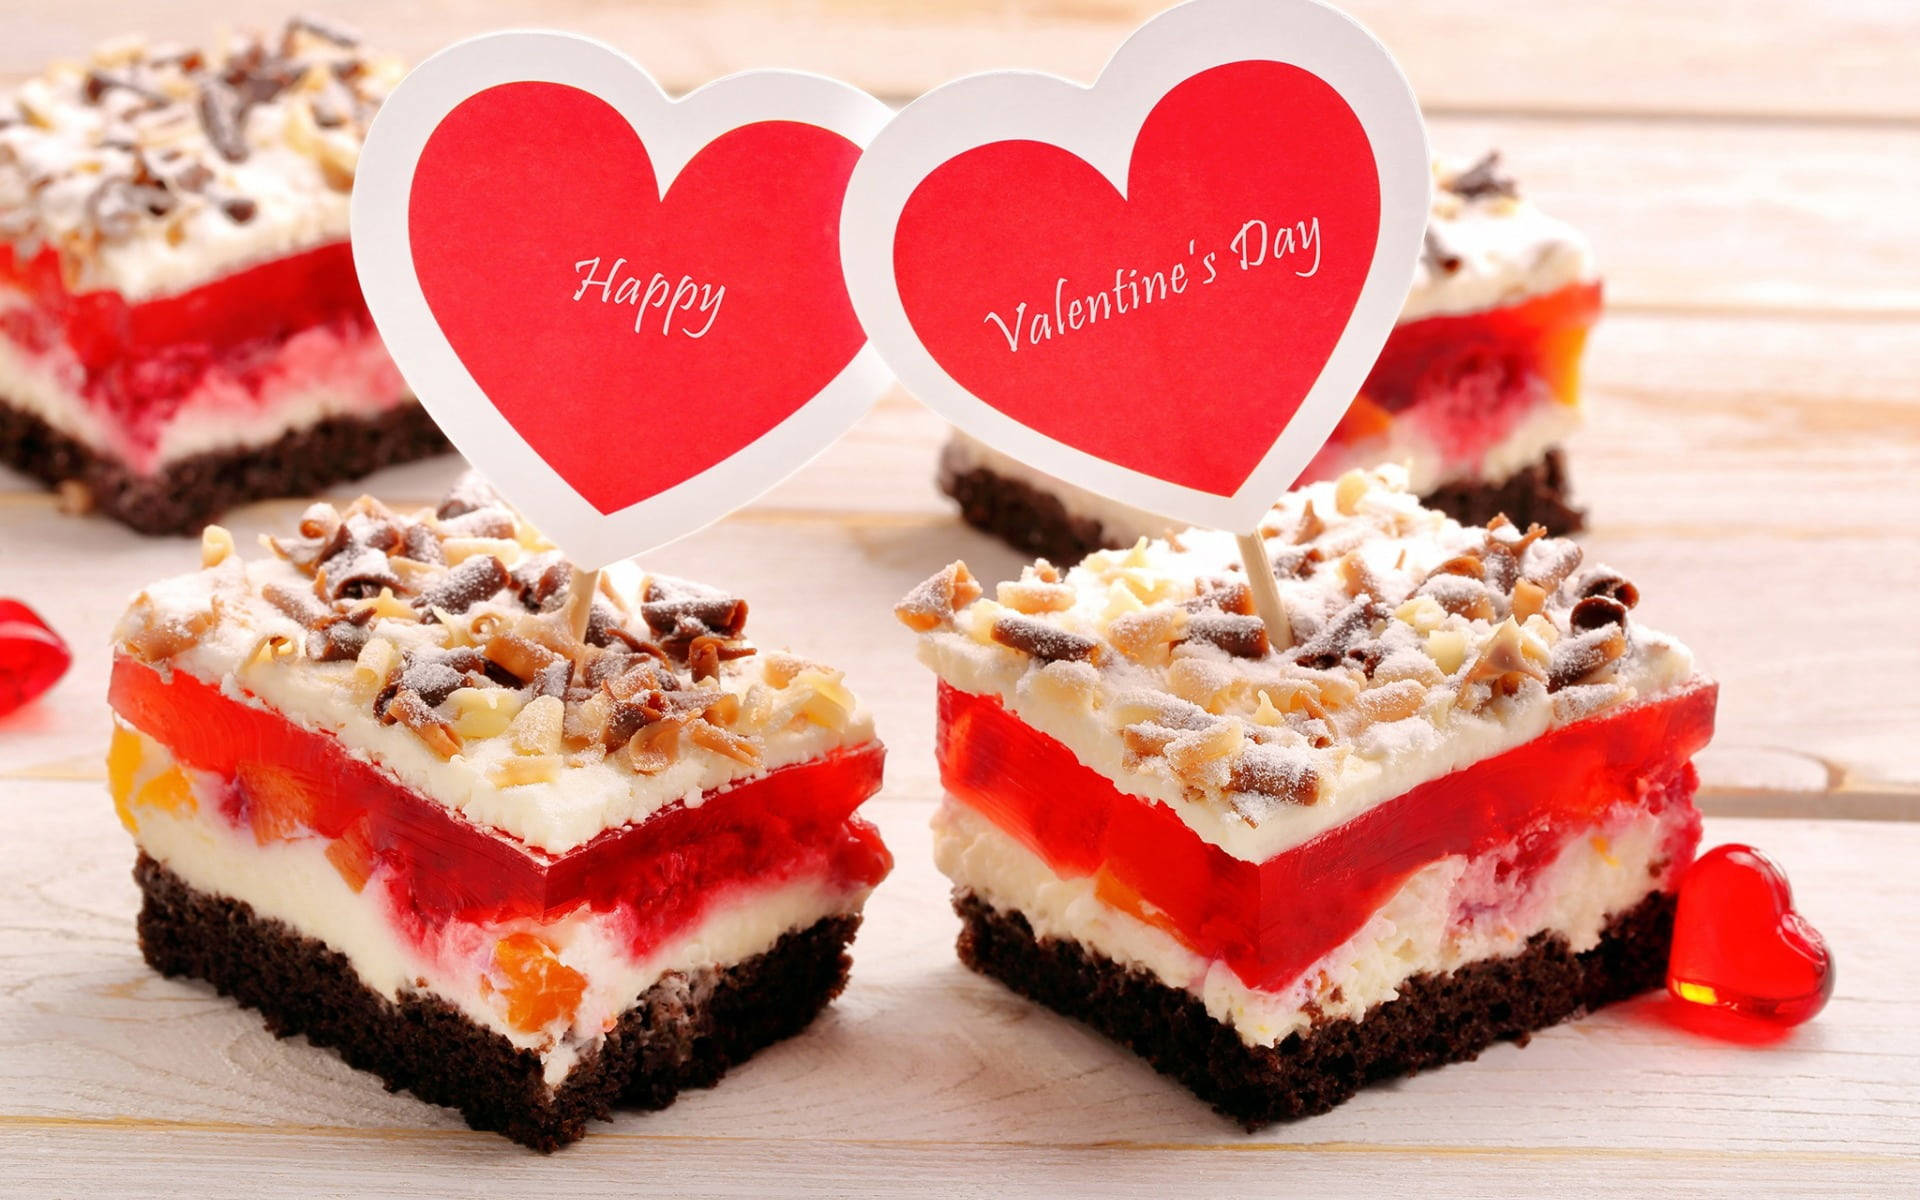 Happy Valentine’s Day Cakes Background